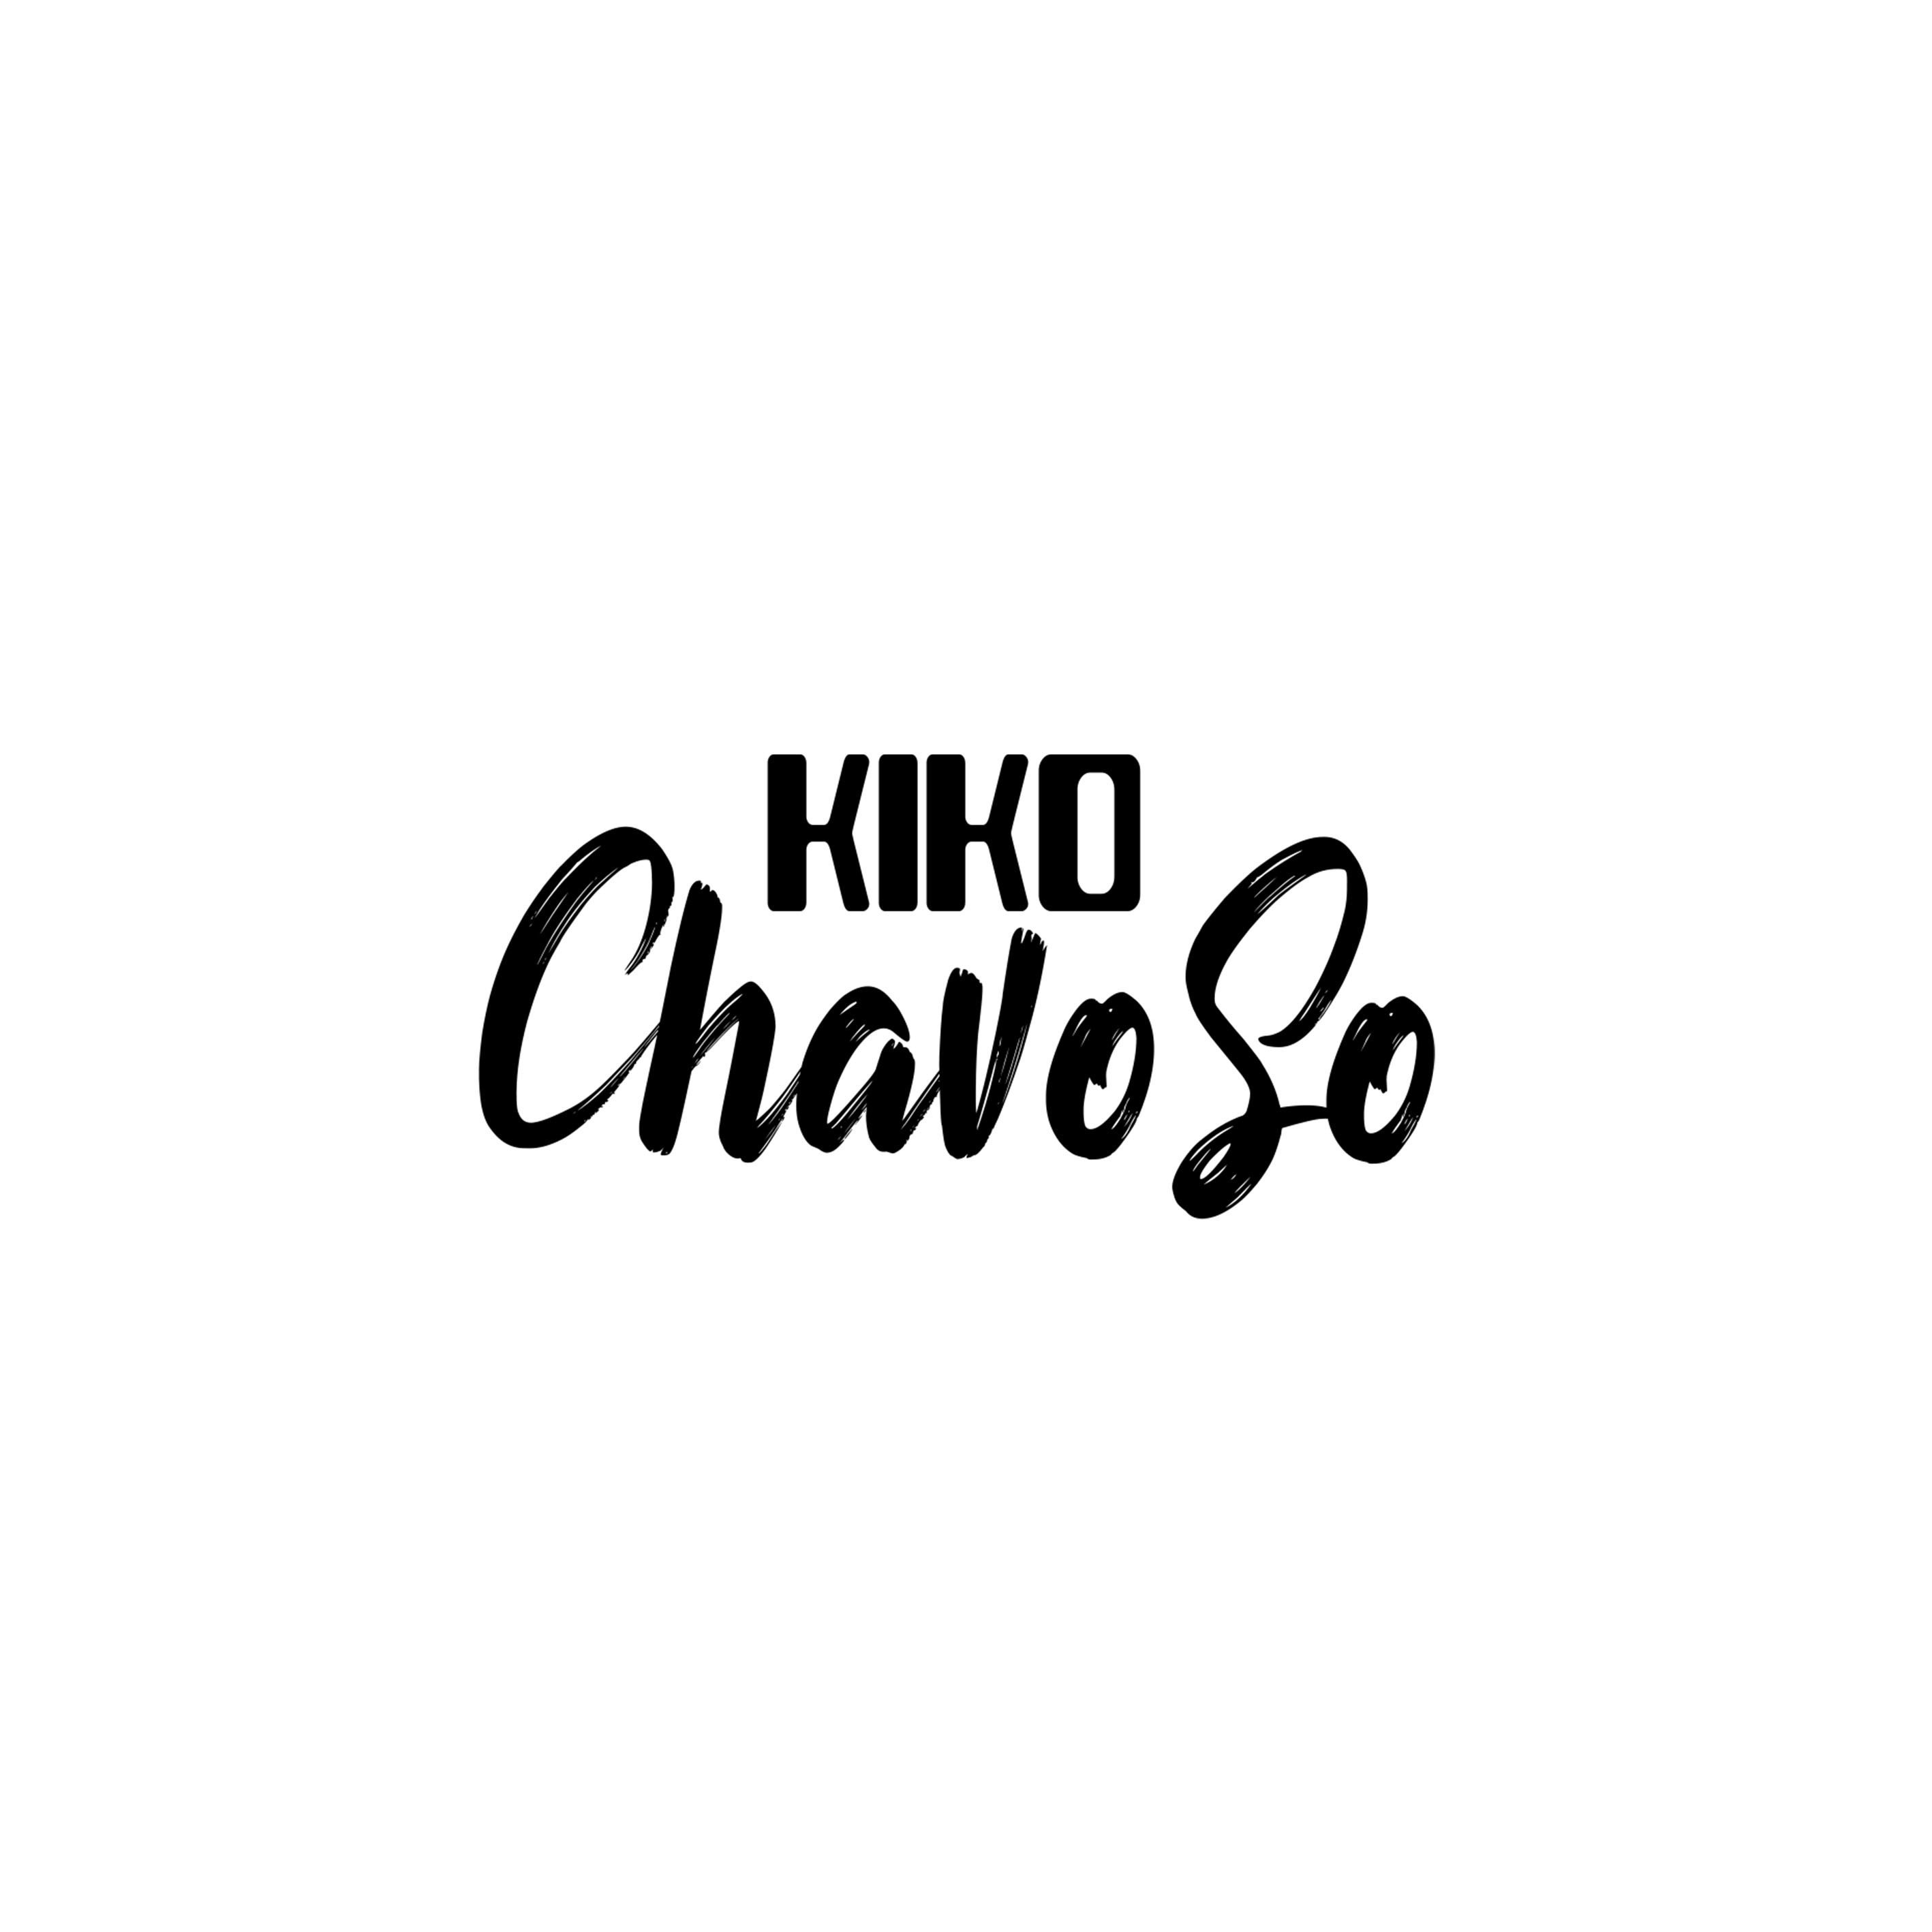 Kiko Chavoso